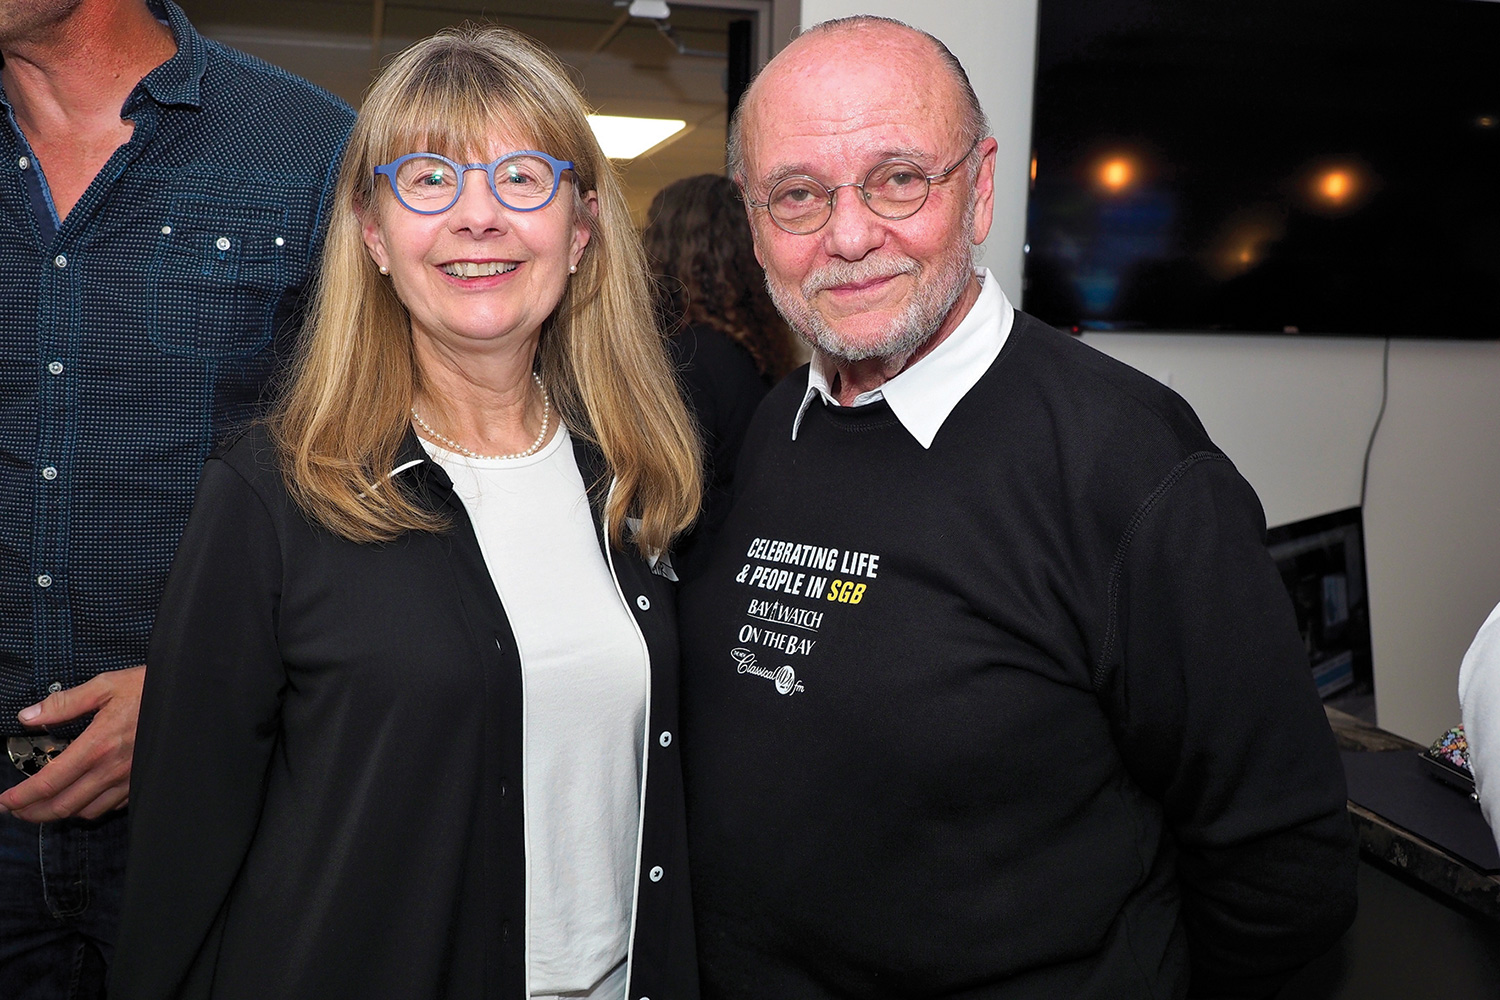 Collingwood Mayor Yvonne Hamlin with Moses Znaimer, founder and president of ZoomerMedia.